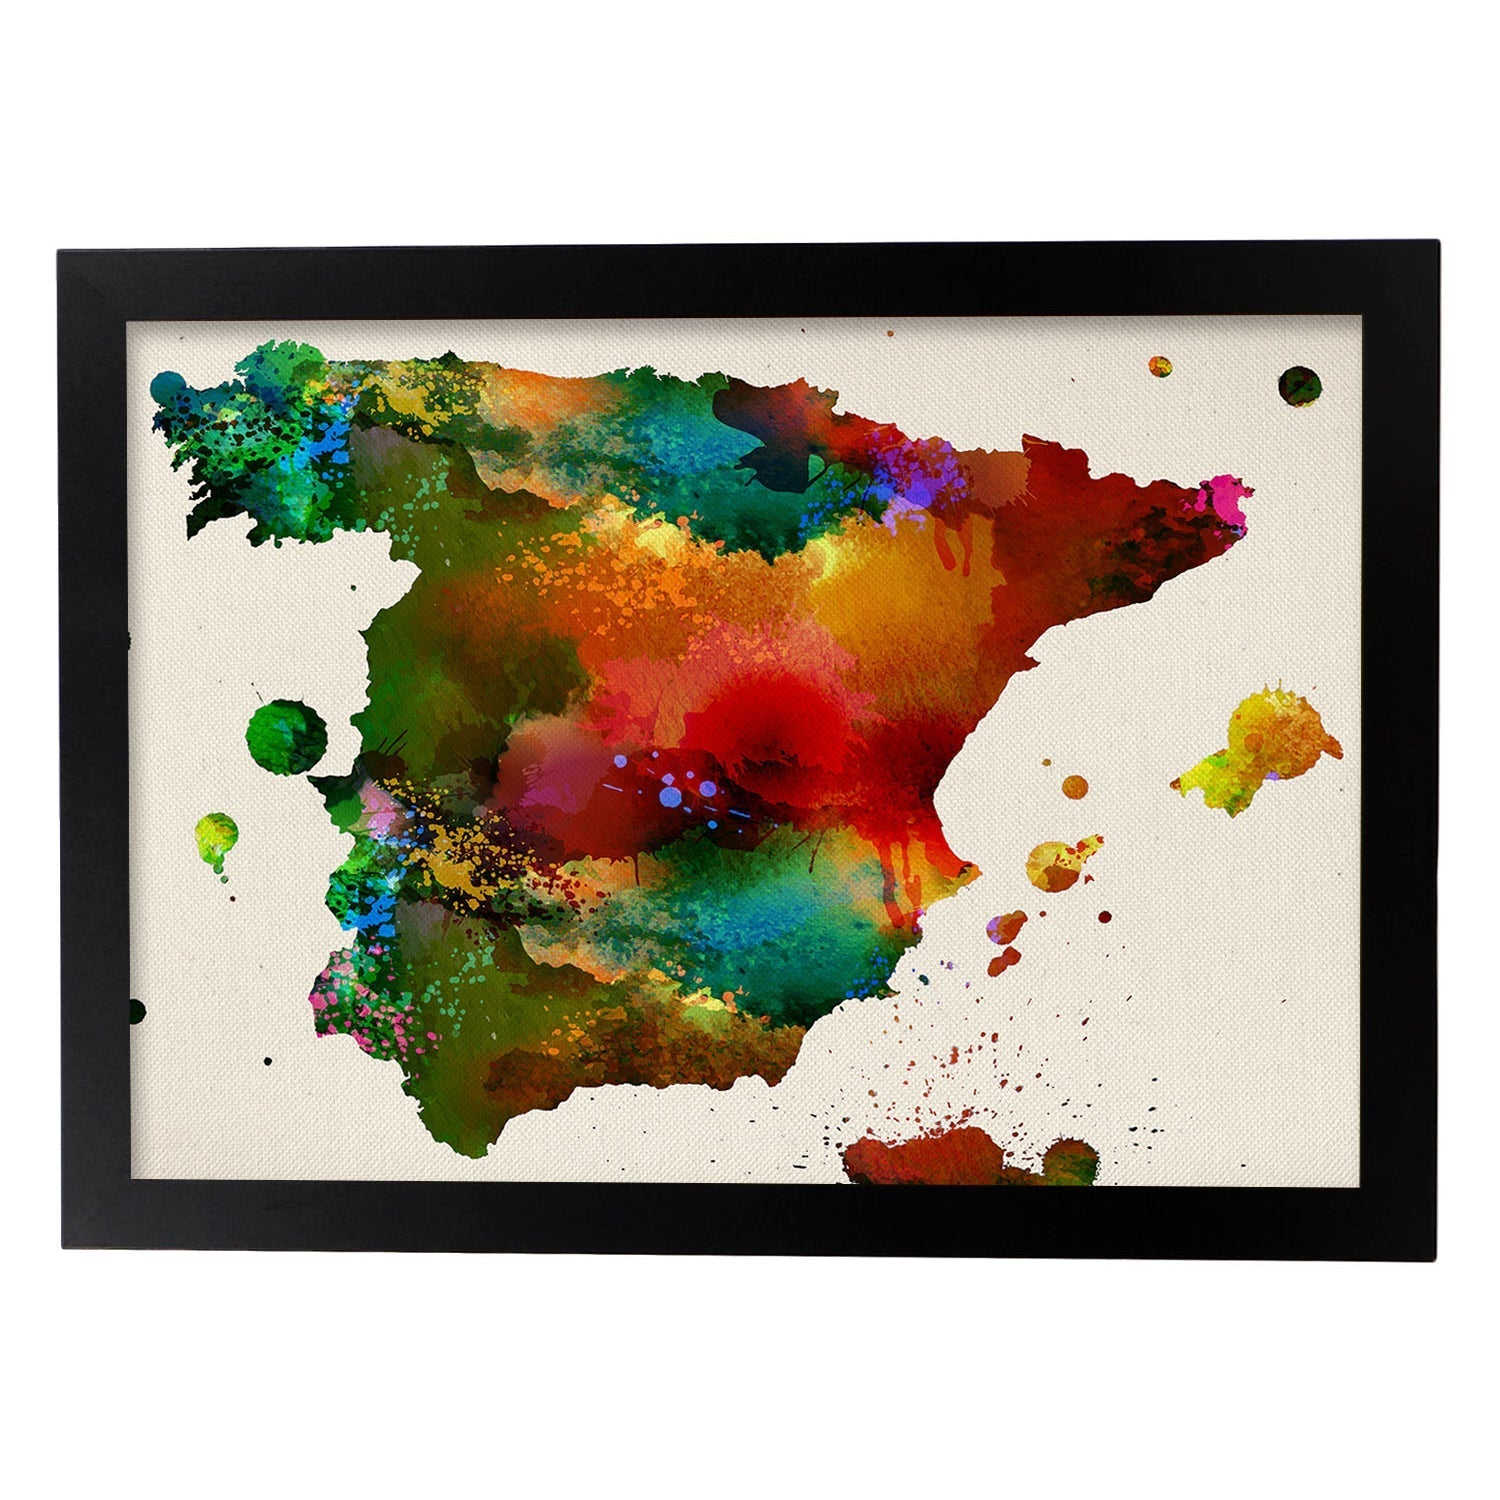 Poster de Mapa Espana 3. Láminas e ilustraciones de ciudades, comunidades, y mapas de España.-Artwork-Nacnic-A4-Marco Negro-Nacnic Estudio SL